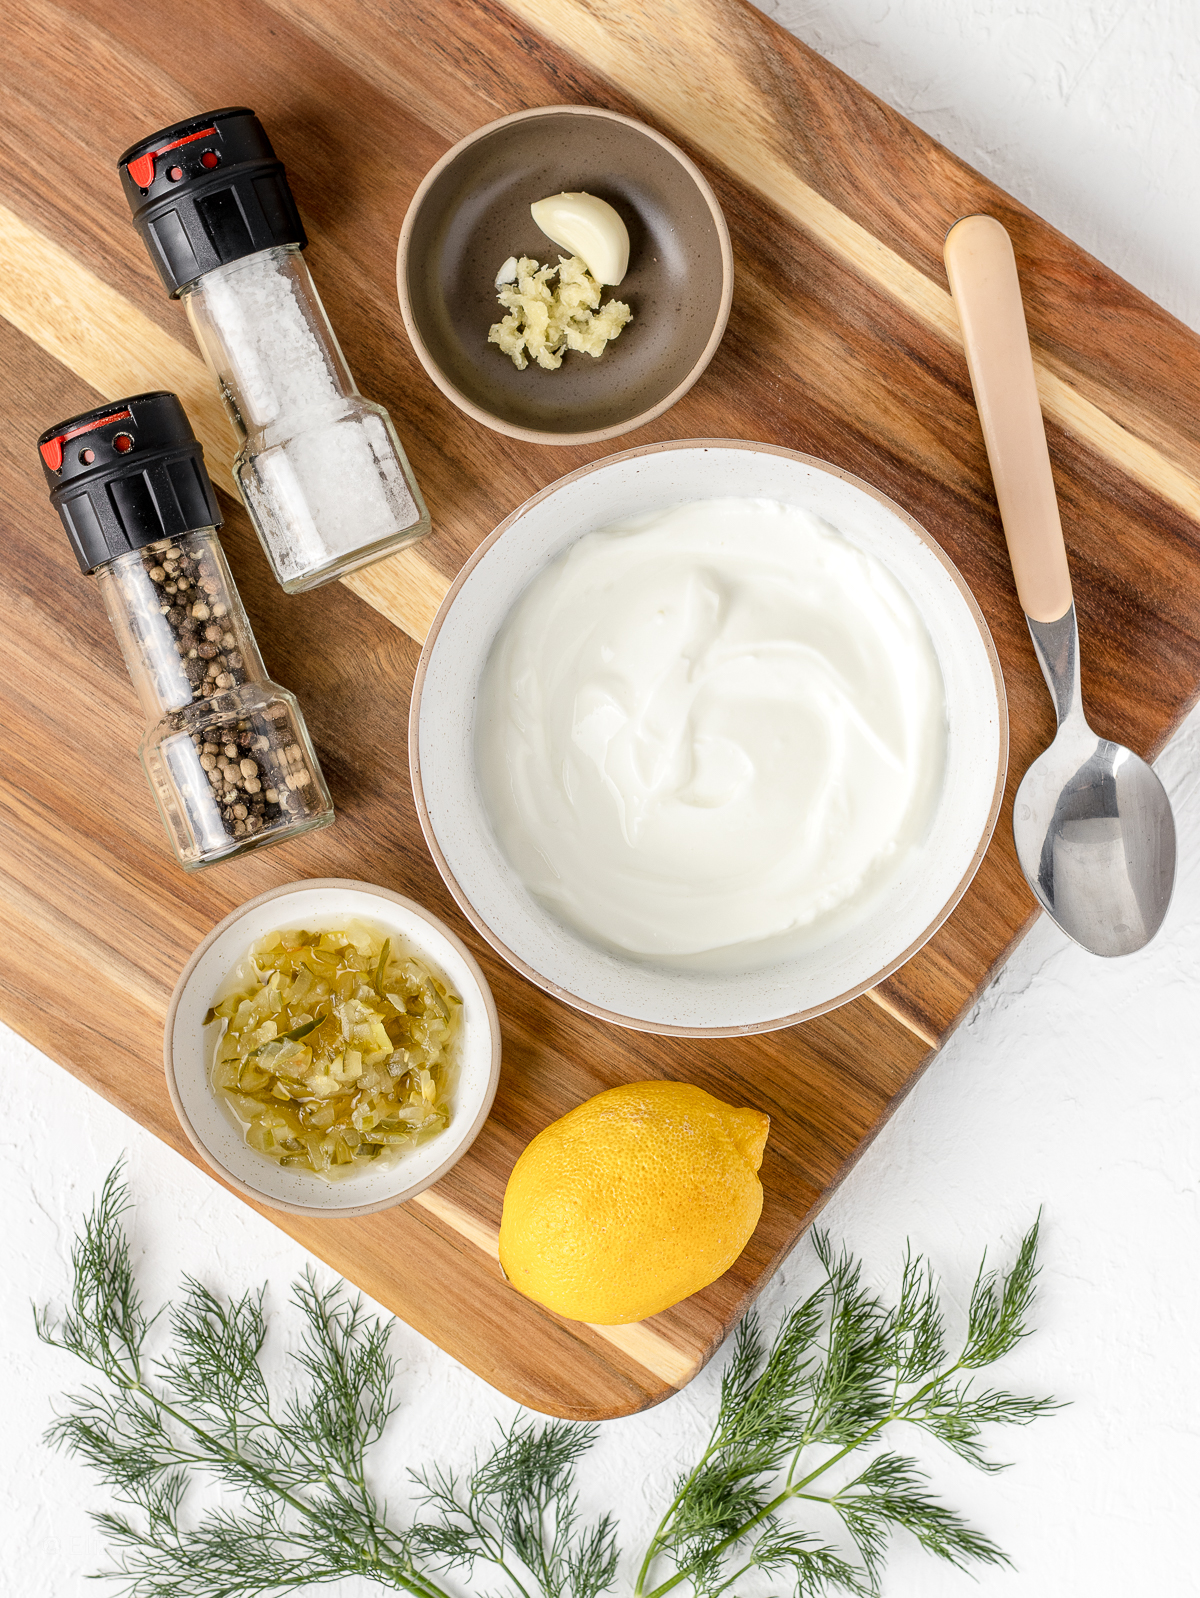 Ingredients. Greek yogurt, minced fresh garlic clove, dill pickle relish, lemon juice, salt, pepper, and fresh chopped dill.